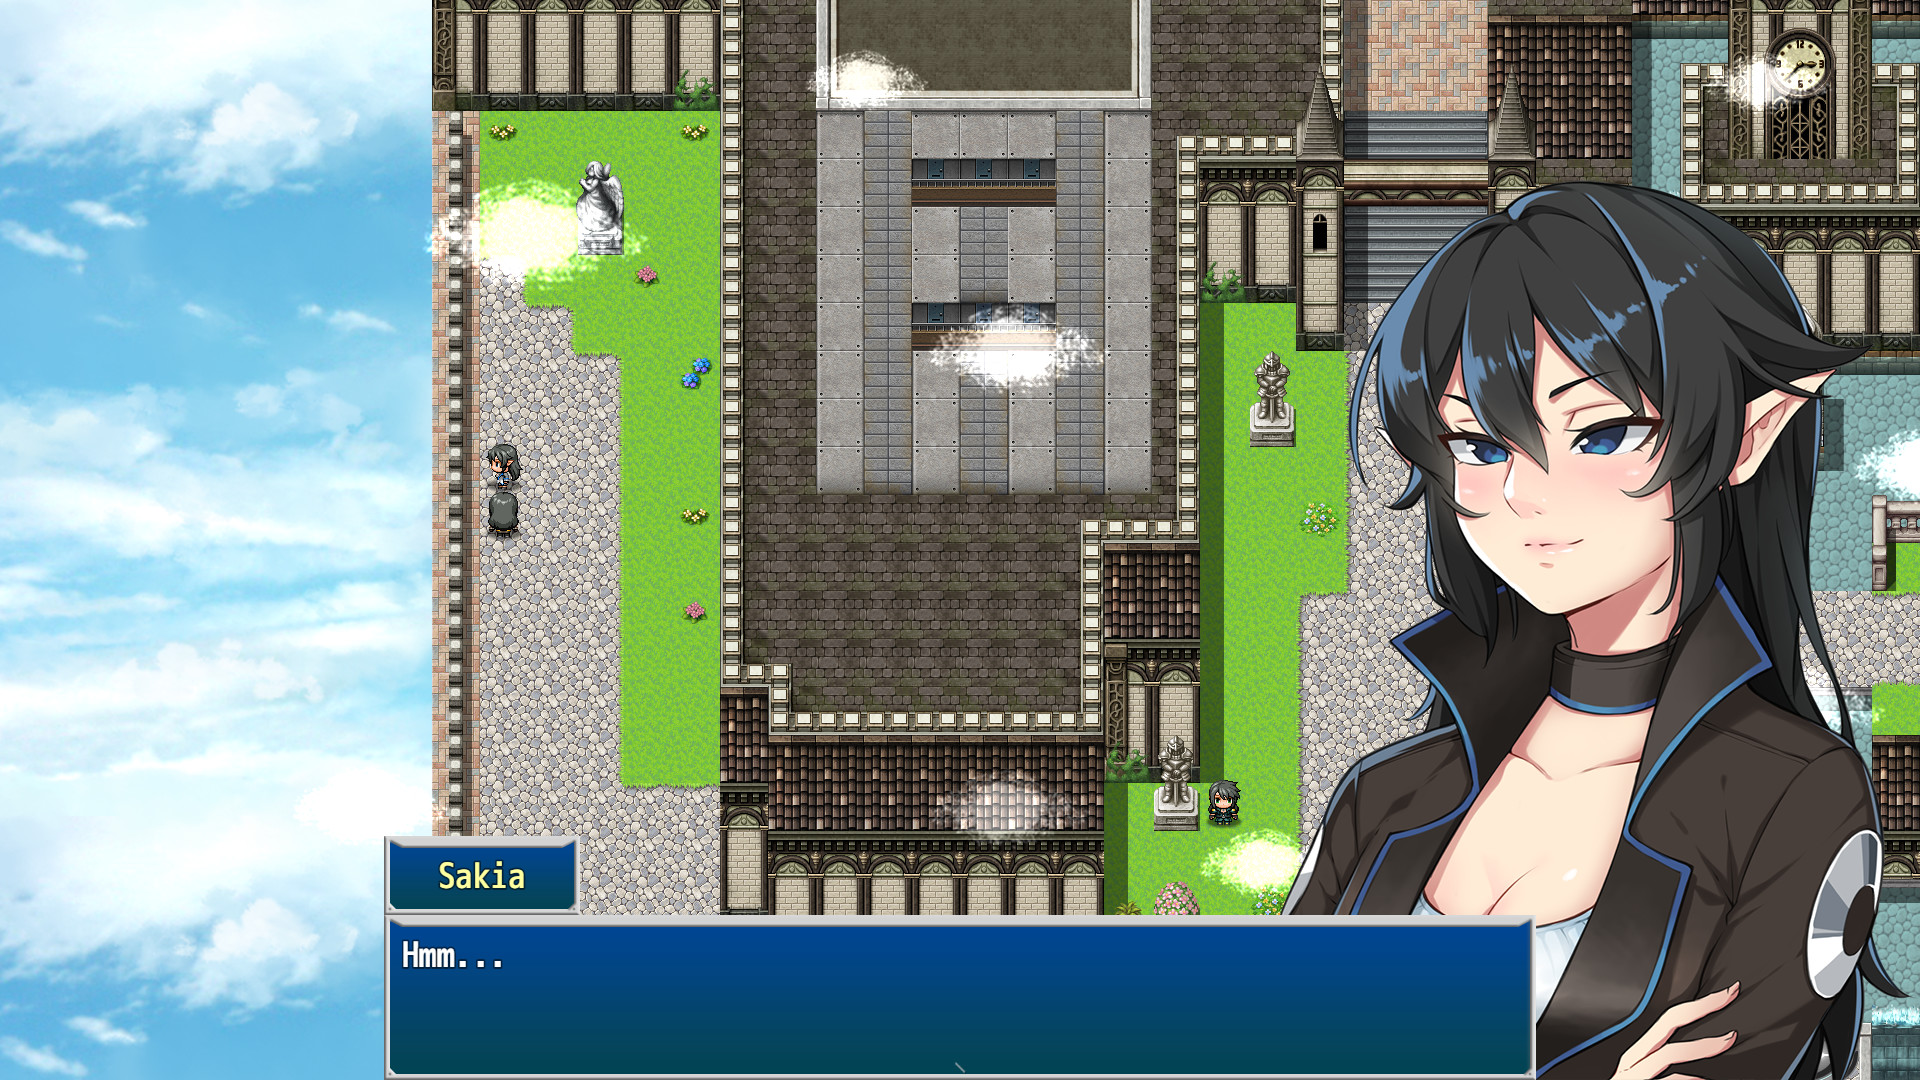 Eternal Dreamers - Sakia, the Manipulator screenshot